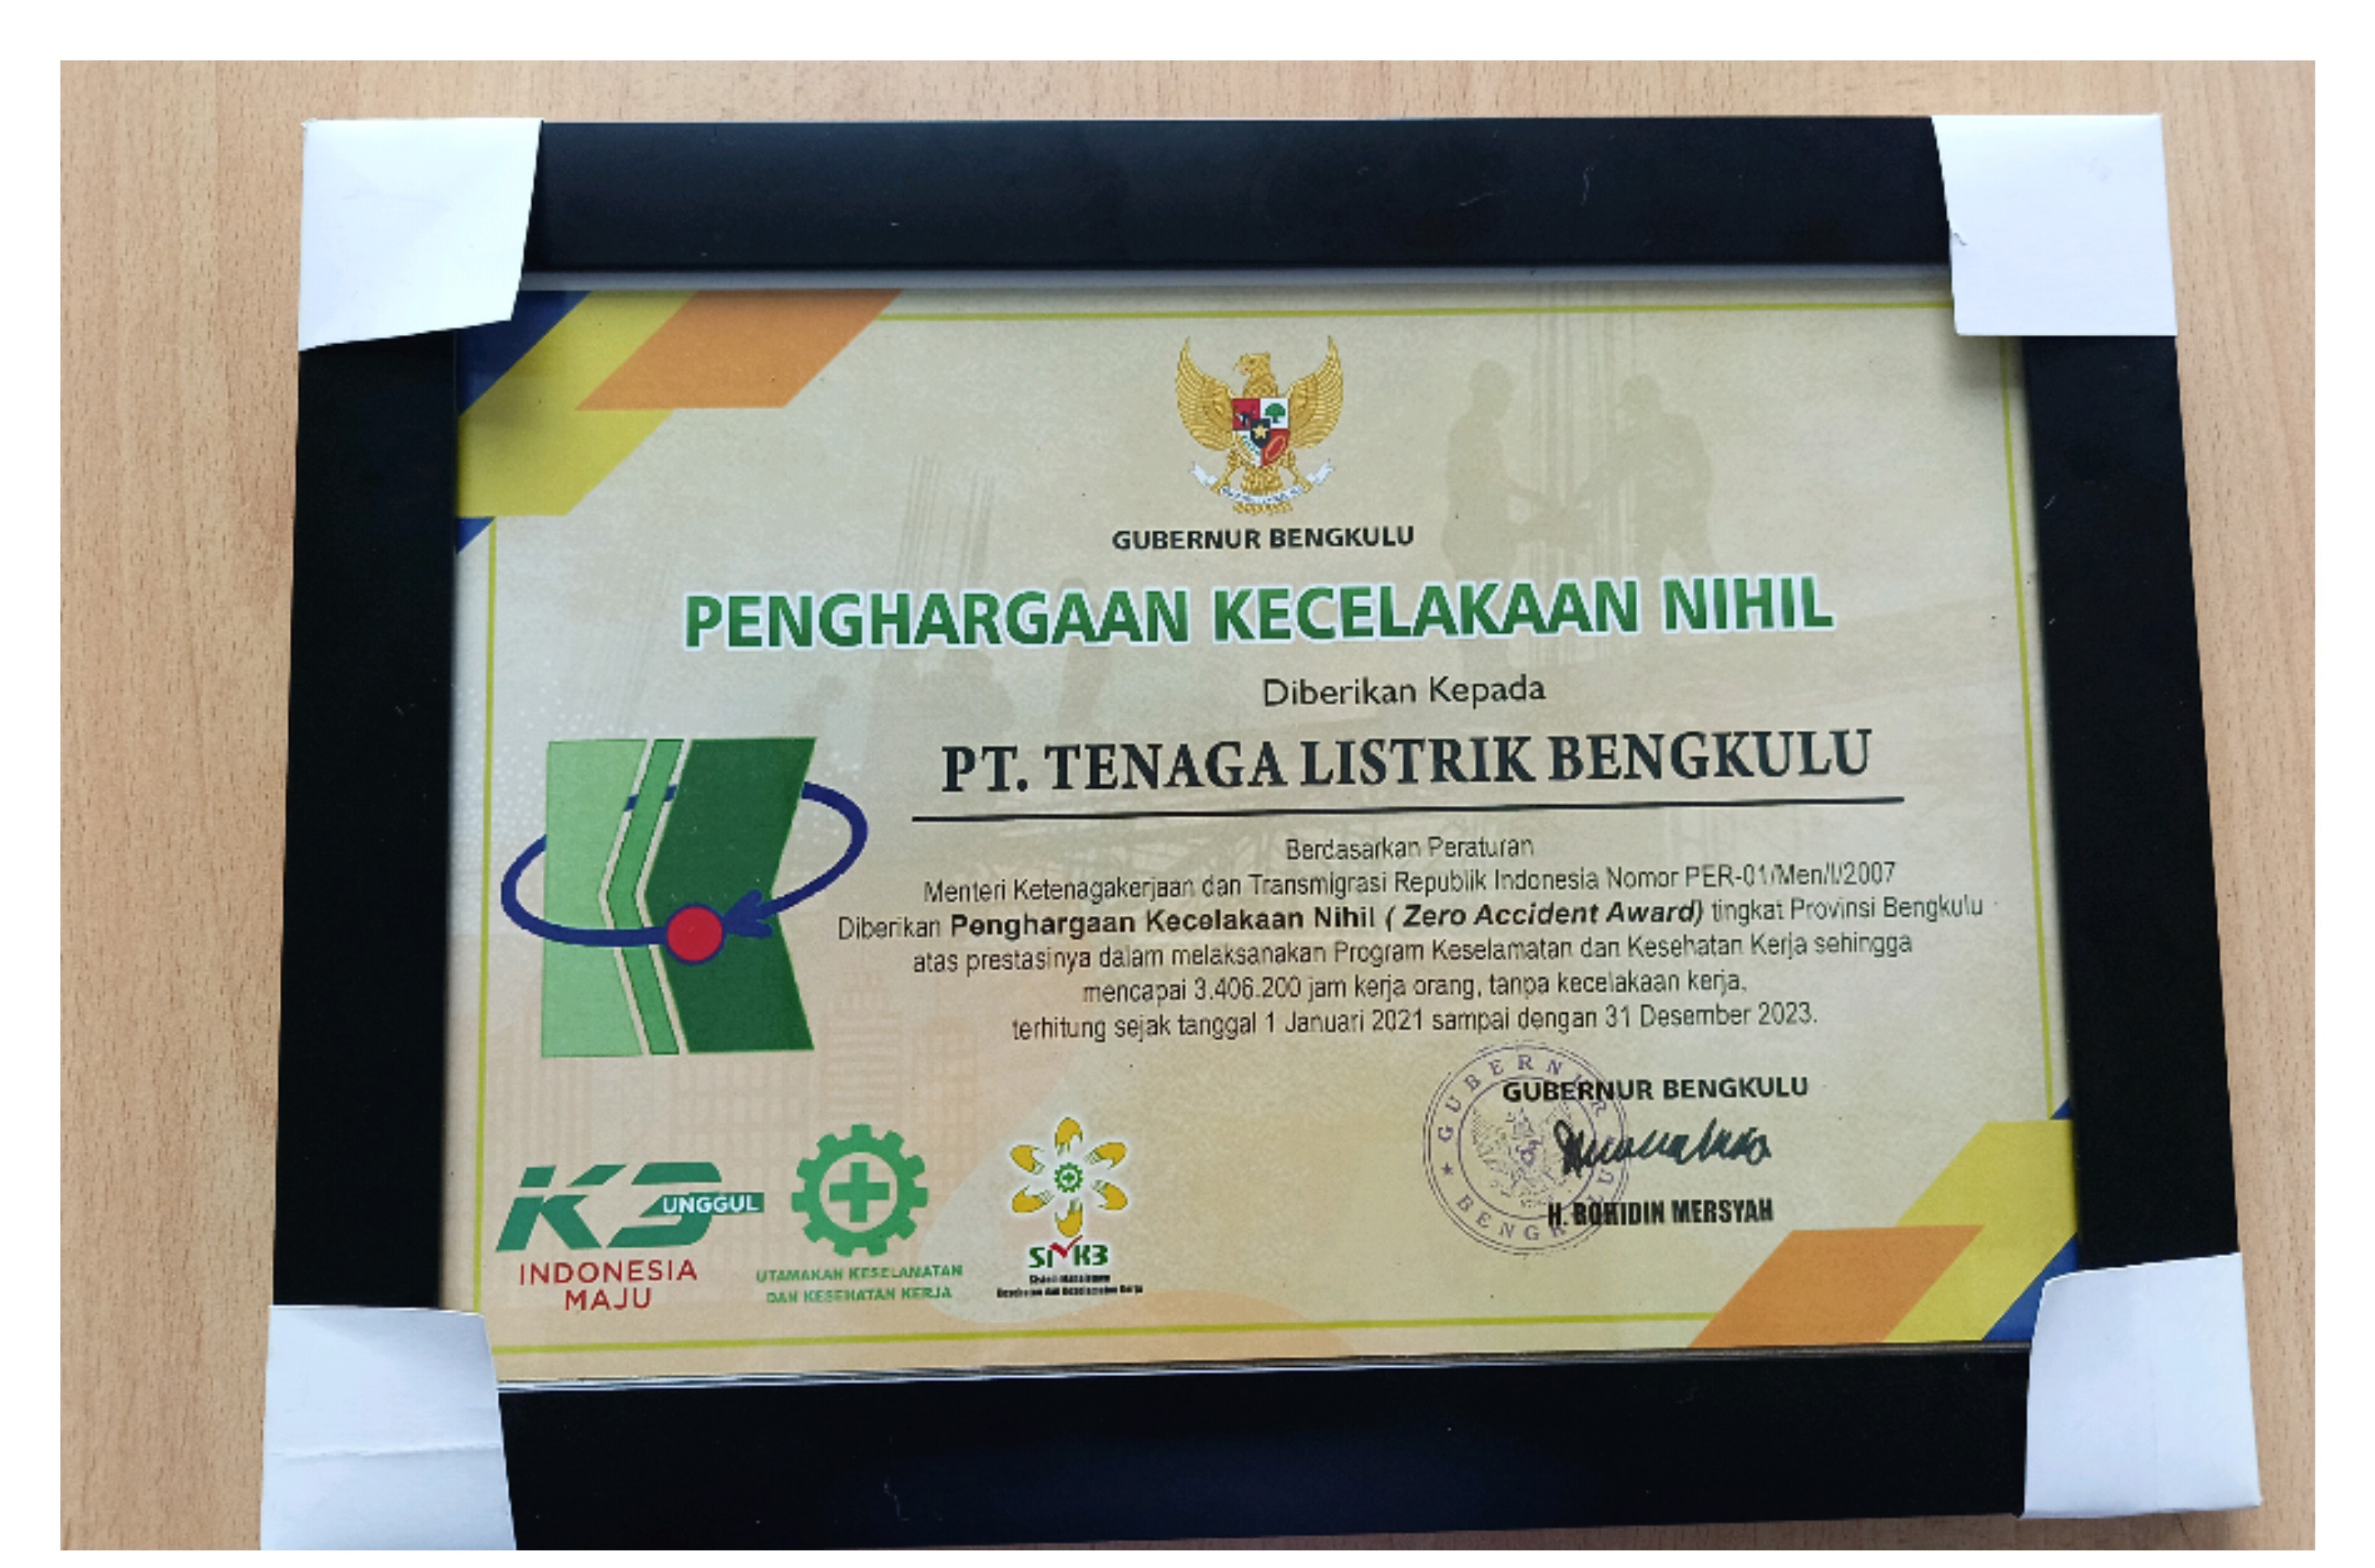 Bengkulu power company wins “Zero Accident Award” from Bengkulu provincial government